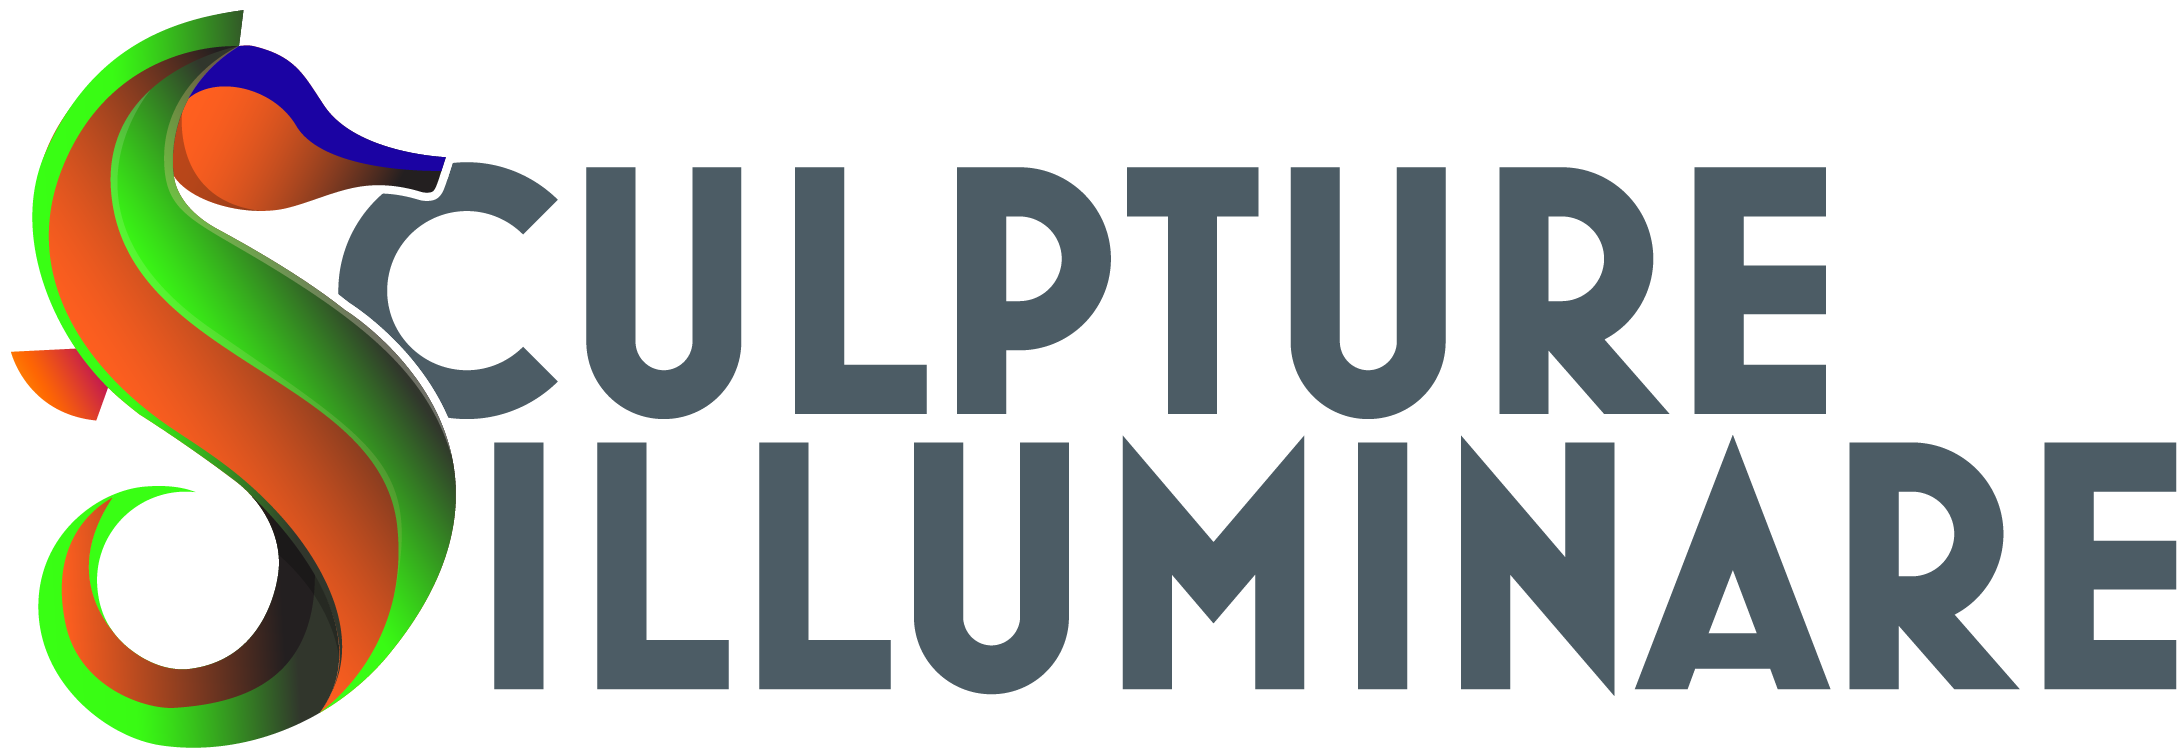 sculpture illuminate logo